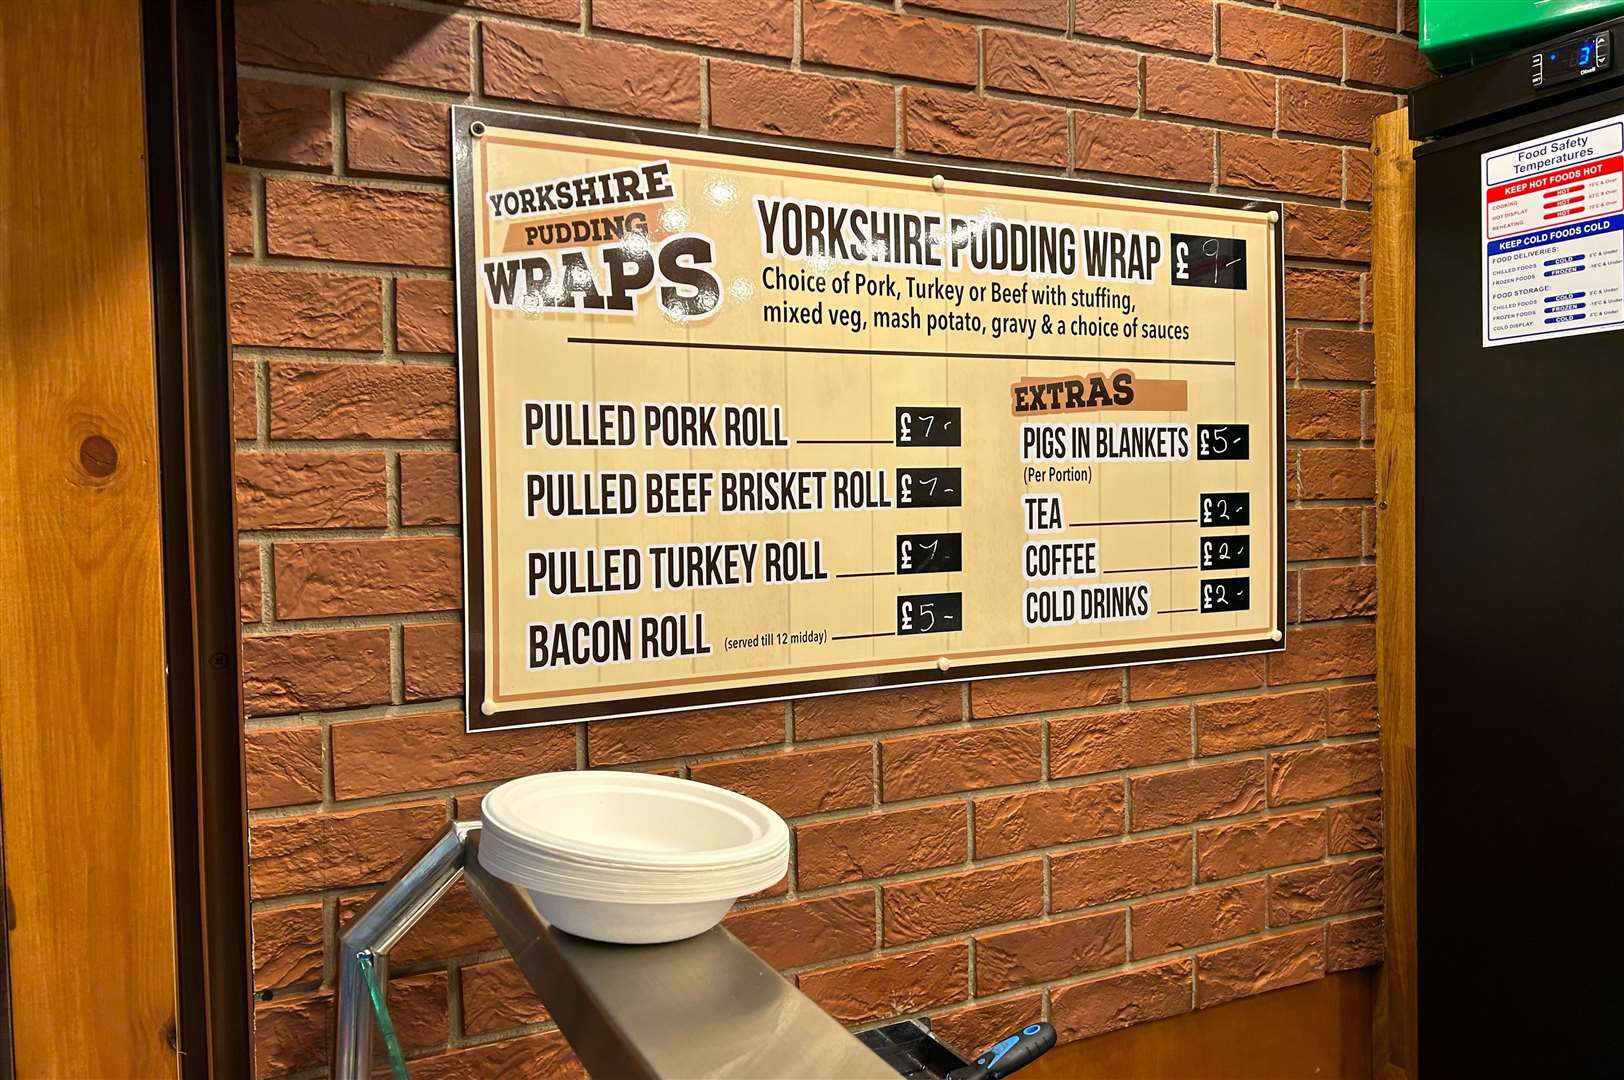 The Yorkshire pudding wrap at Ashford Designer Outlet set our reporter back £9